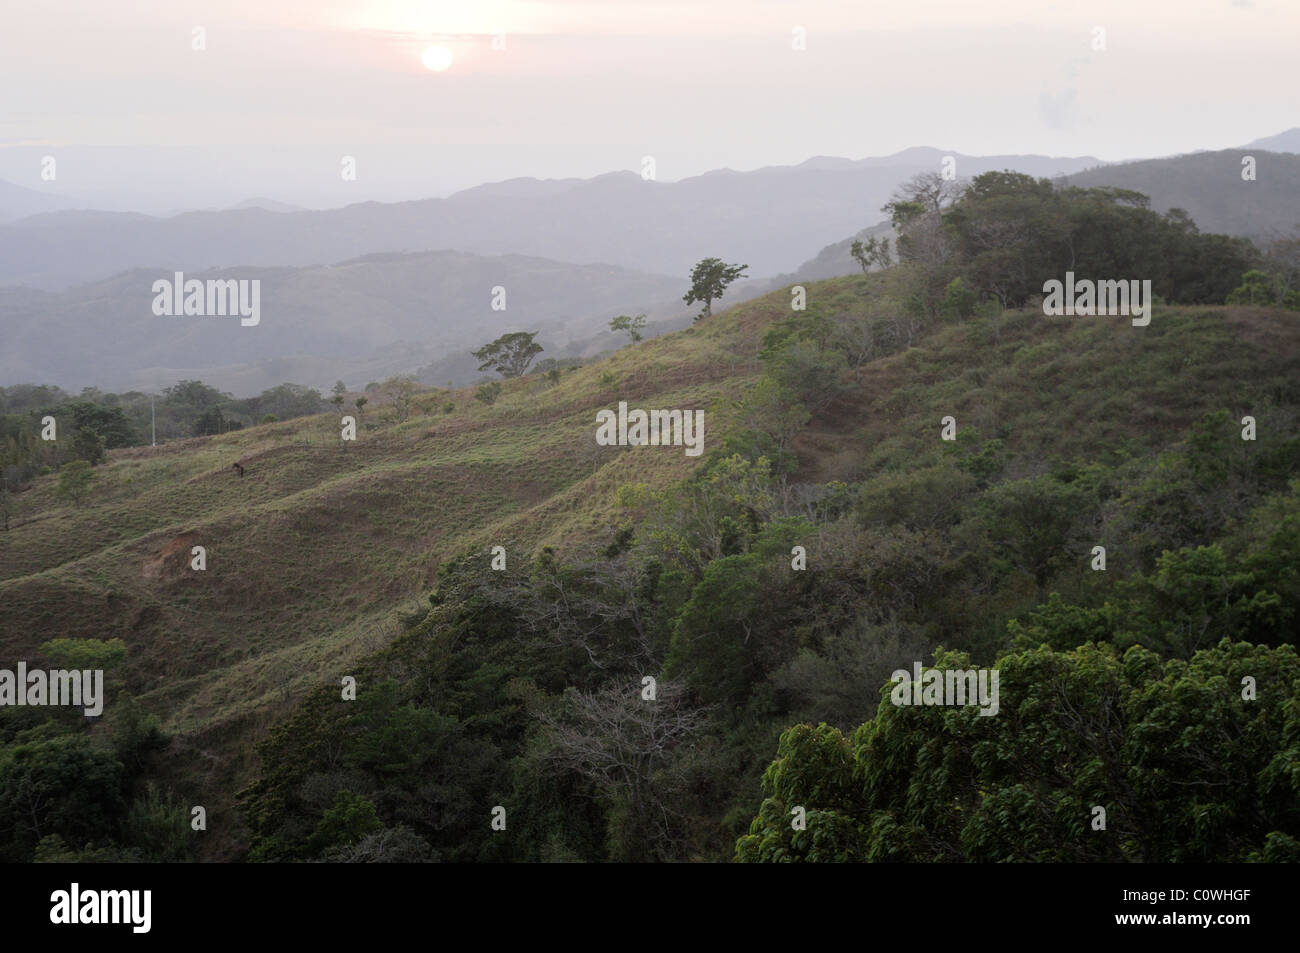 Pasture on the mountain slopes, Costa Rica Stock Photo